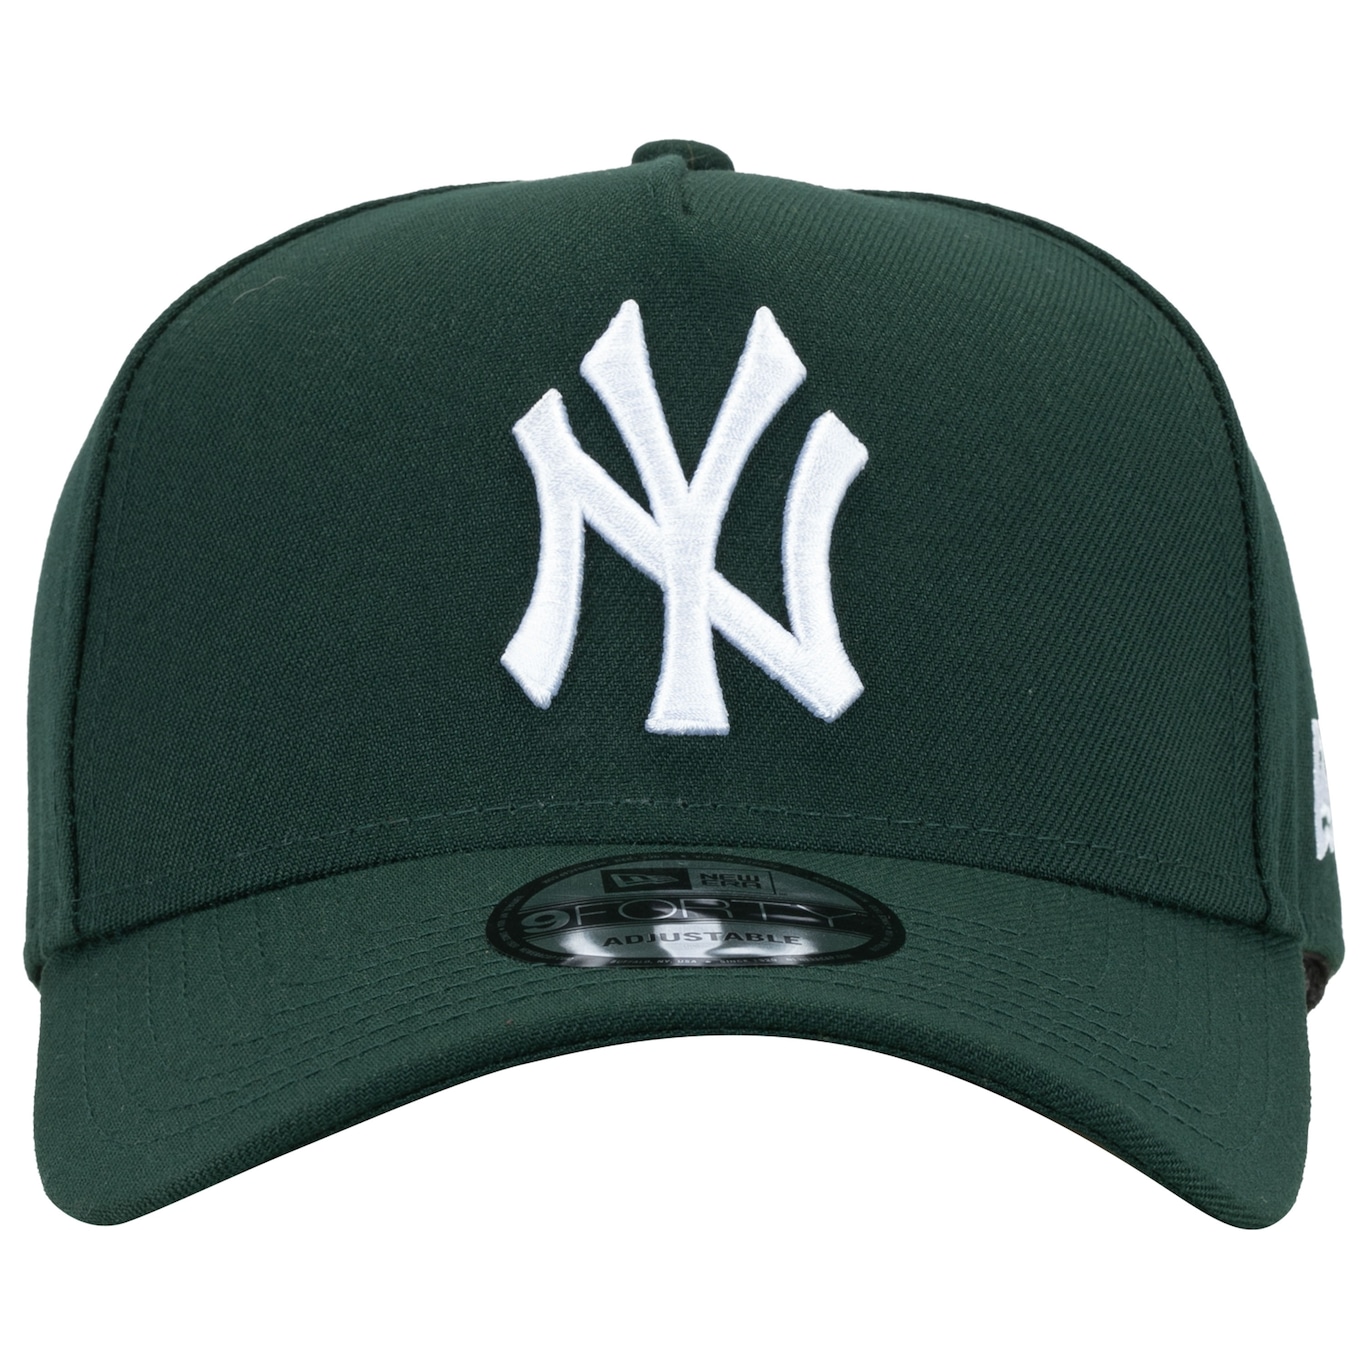 Boné New York Yankees Aba Curva Snapback 940 Veranito - Adulto - Foto 6